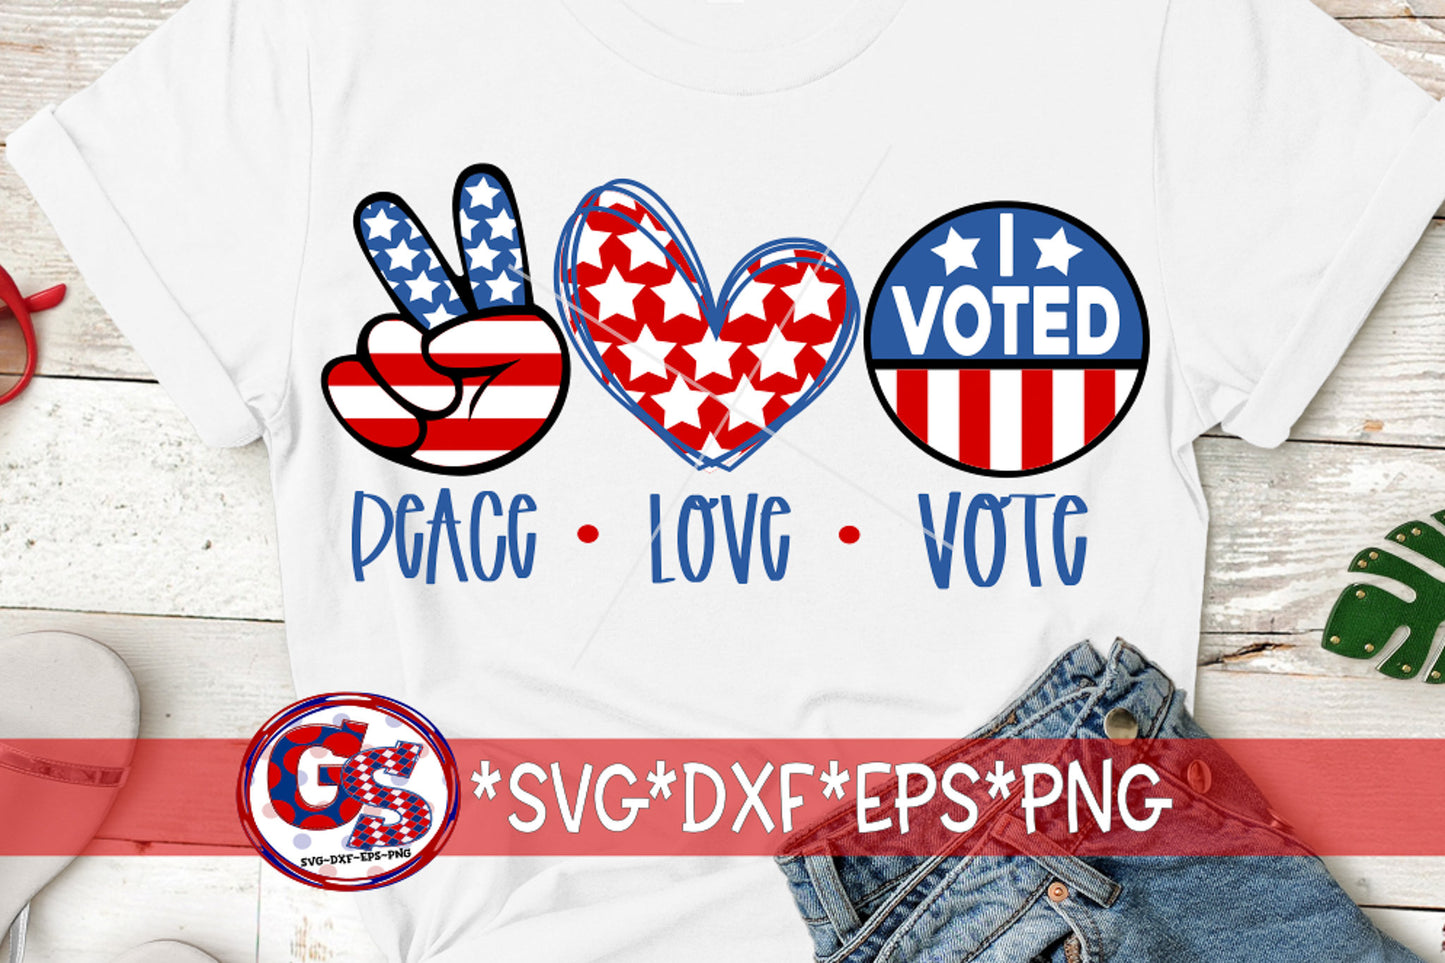 Peace Love Vote svg, eps, dxf, png. July 4th SvG | Election Day DxF | Vote SvG  | America SvG | I Voted SvG | Instant Download Cut Files